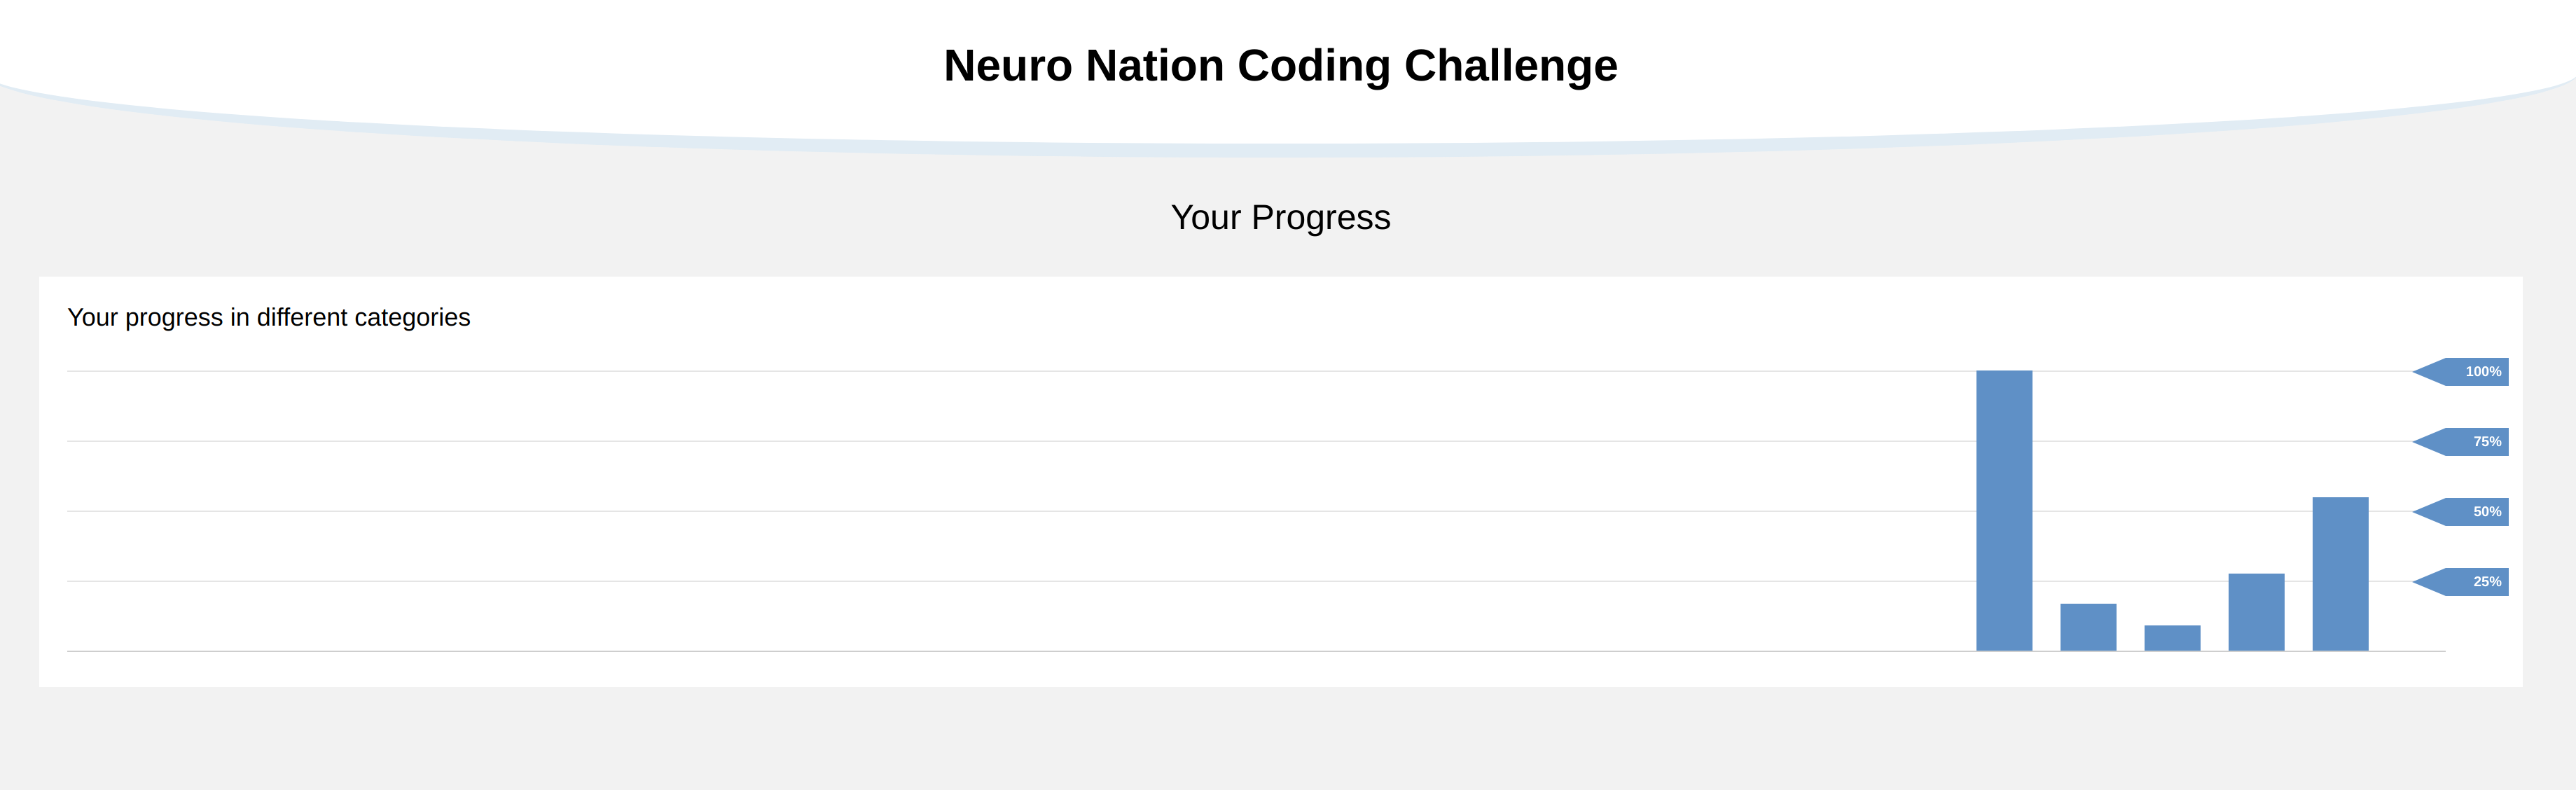 NeuroNation Coding Challenge